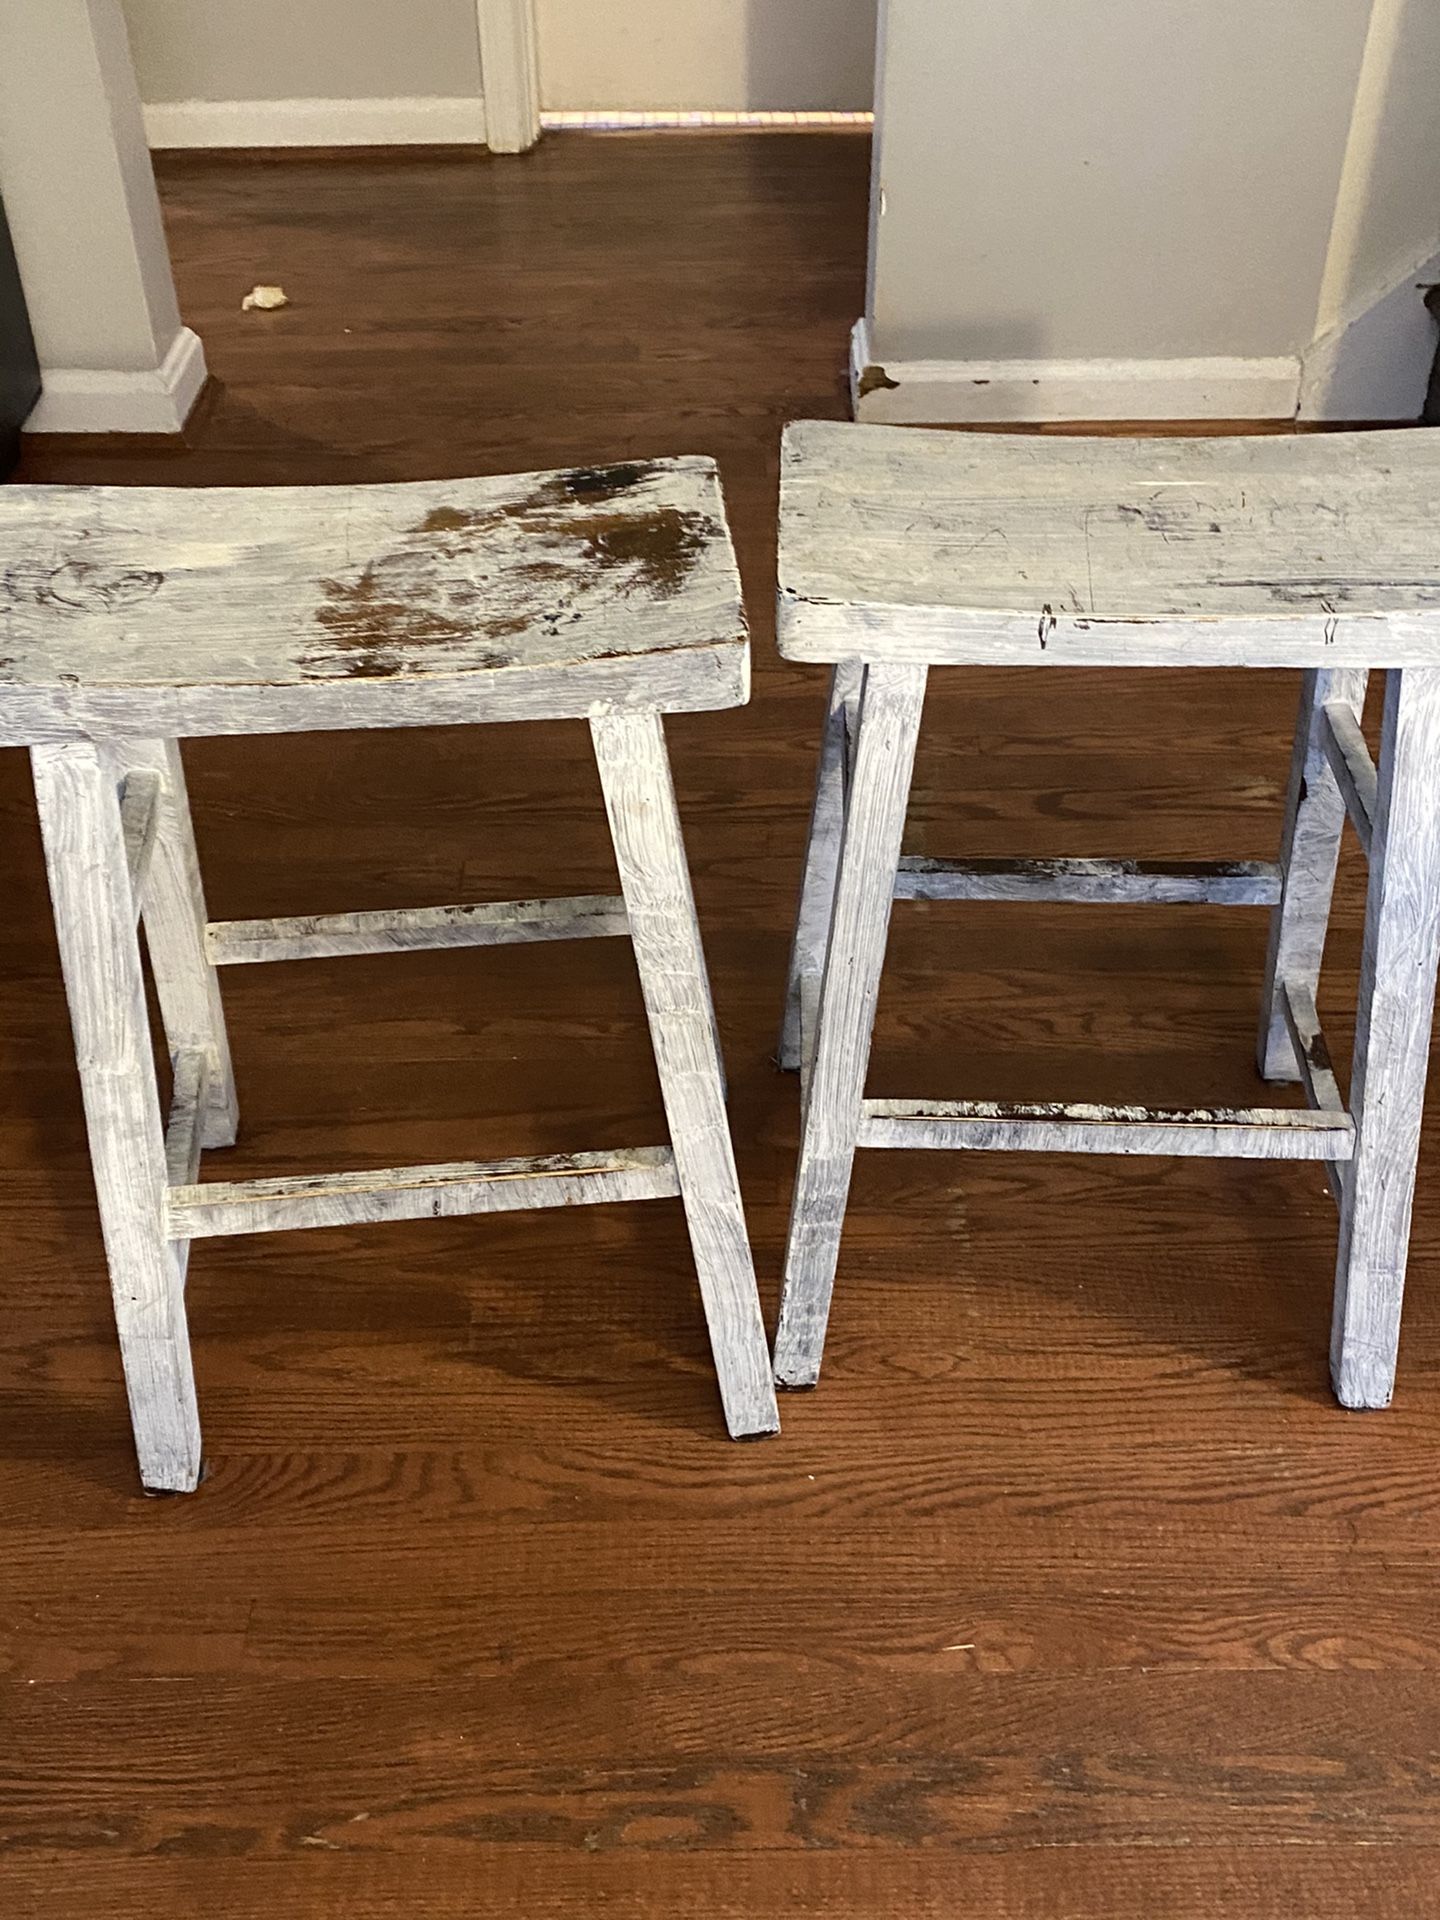 Matching stools